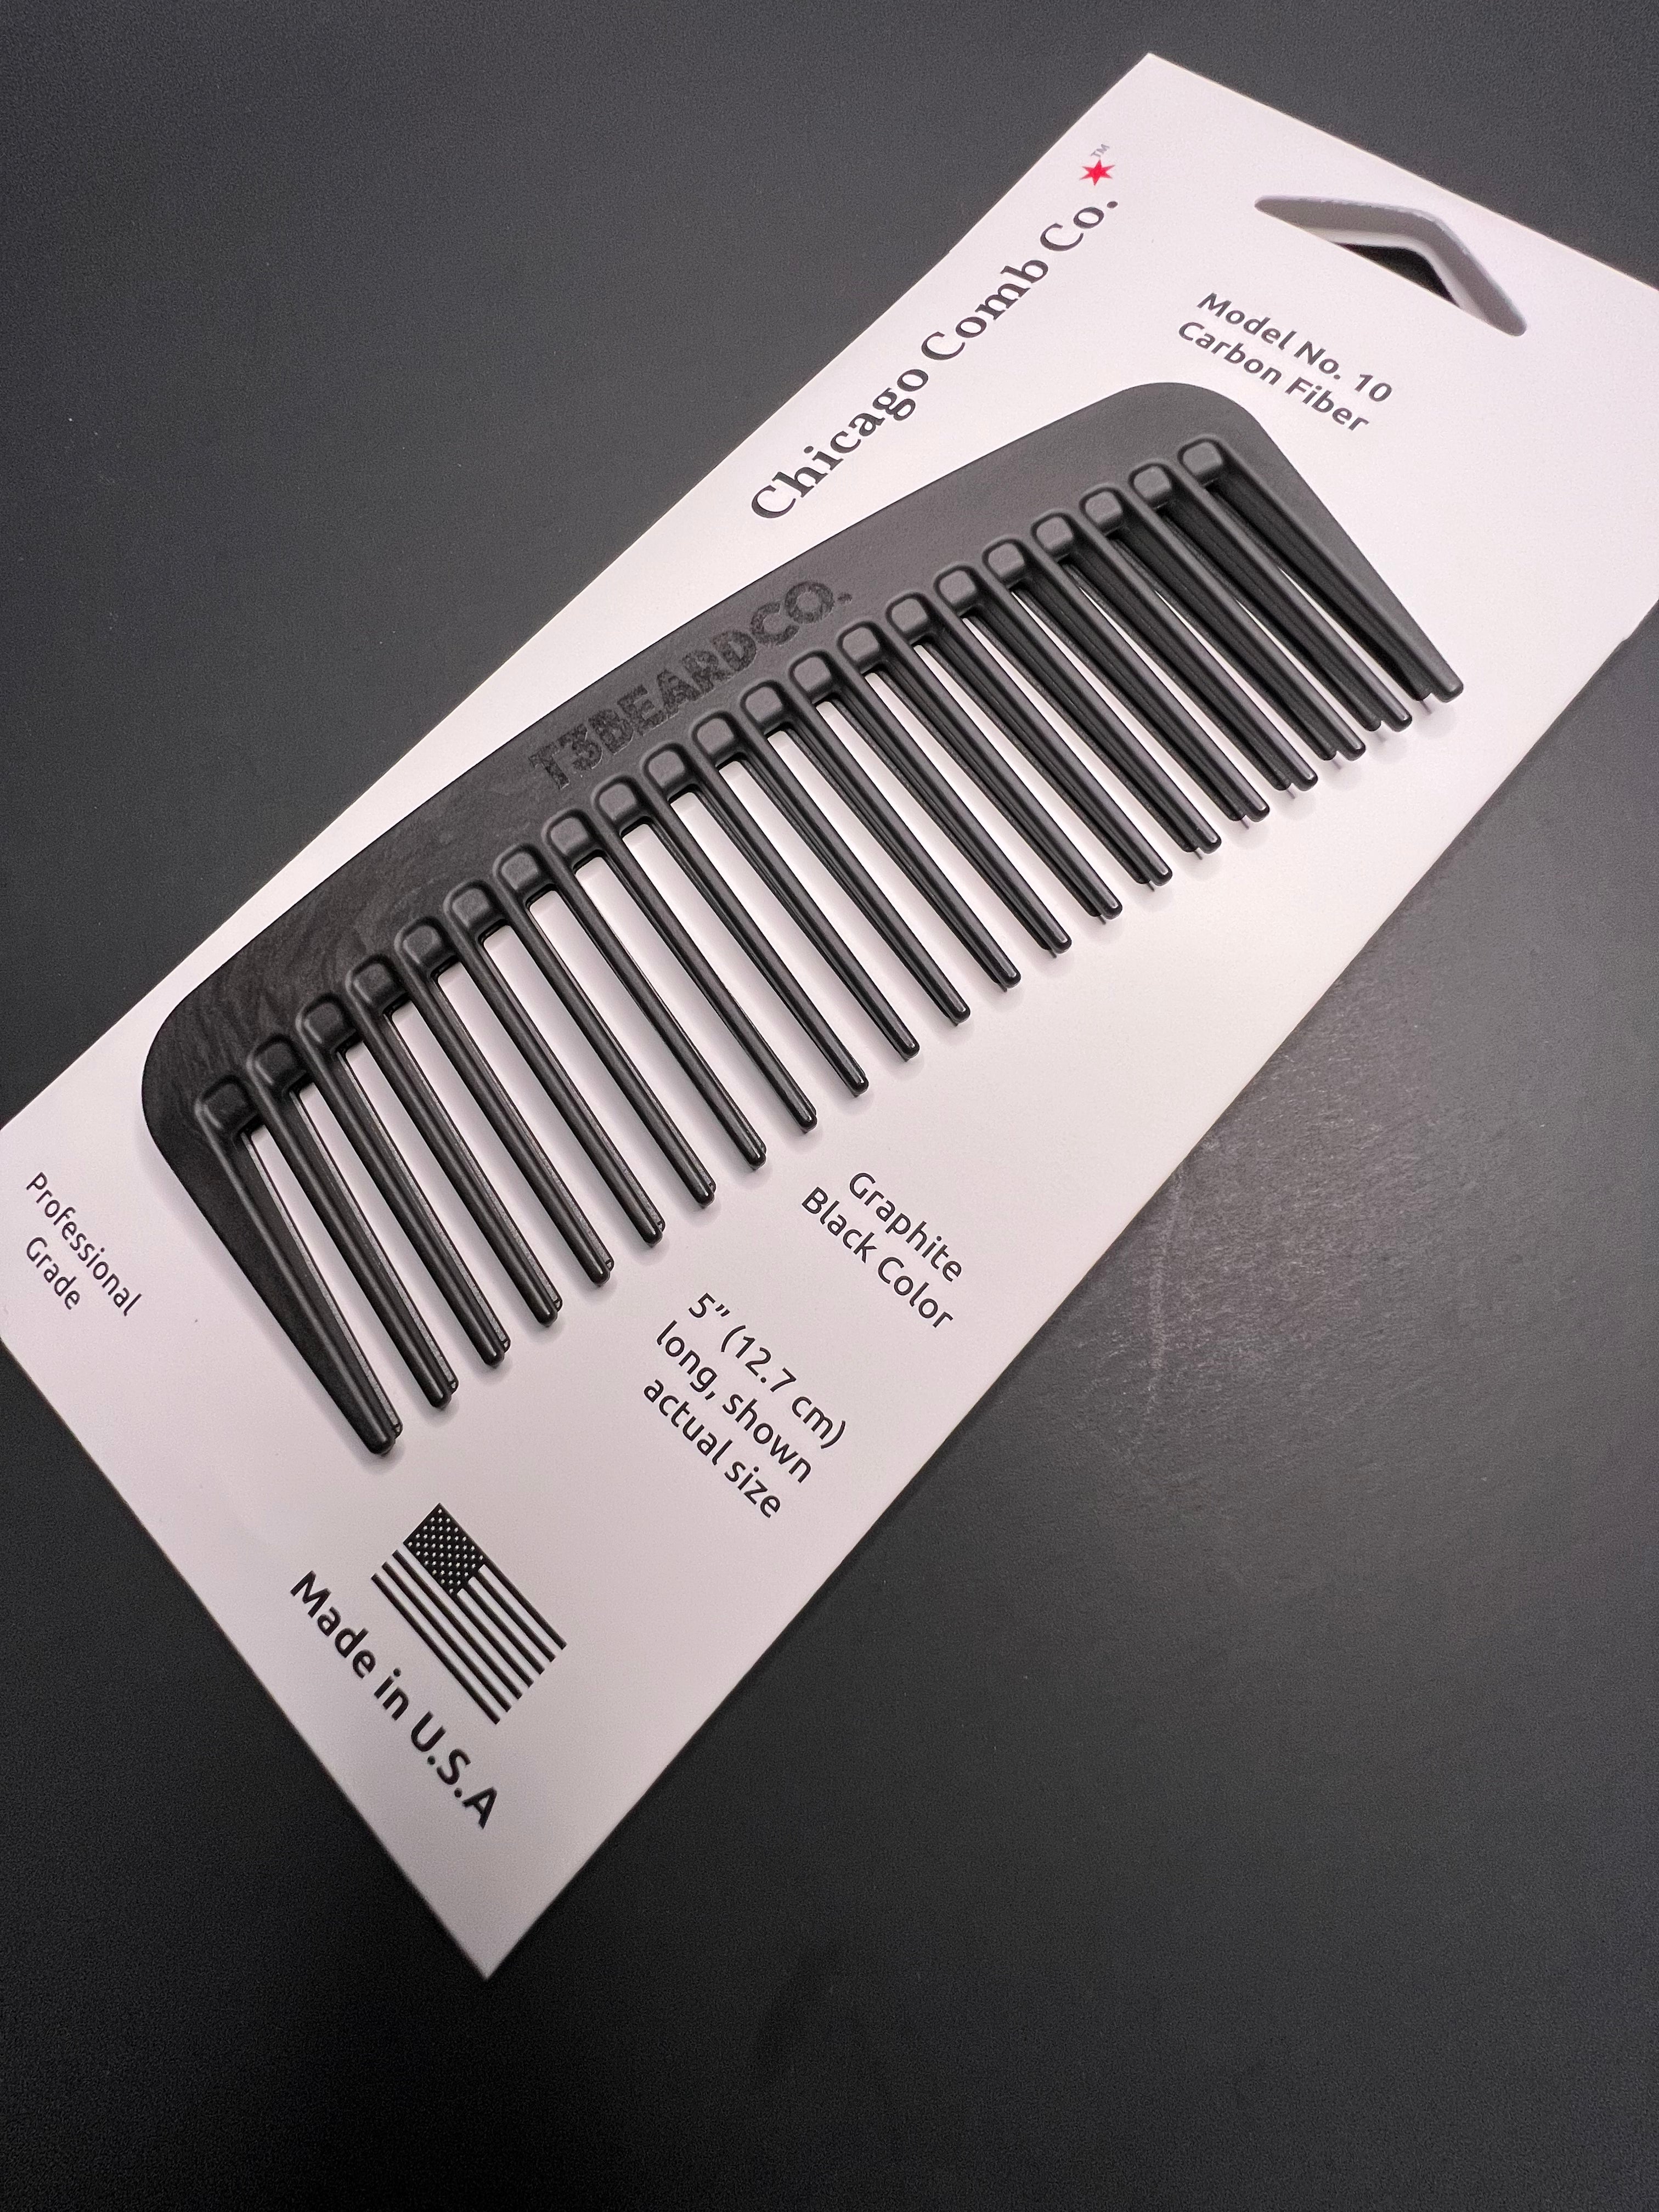 Model Carbon Fiber Comb by Chicago Comb Co.